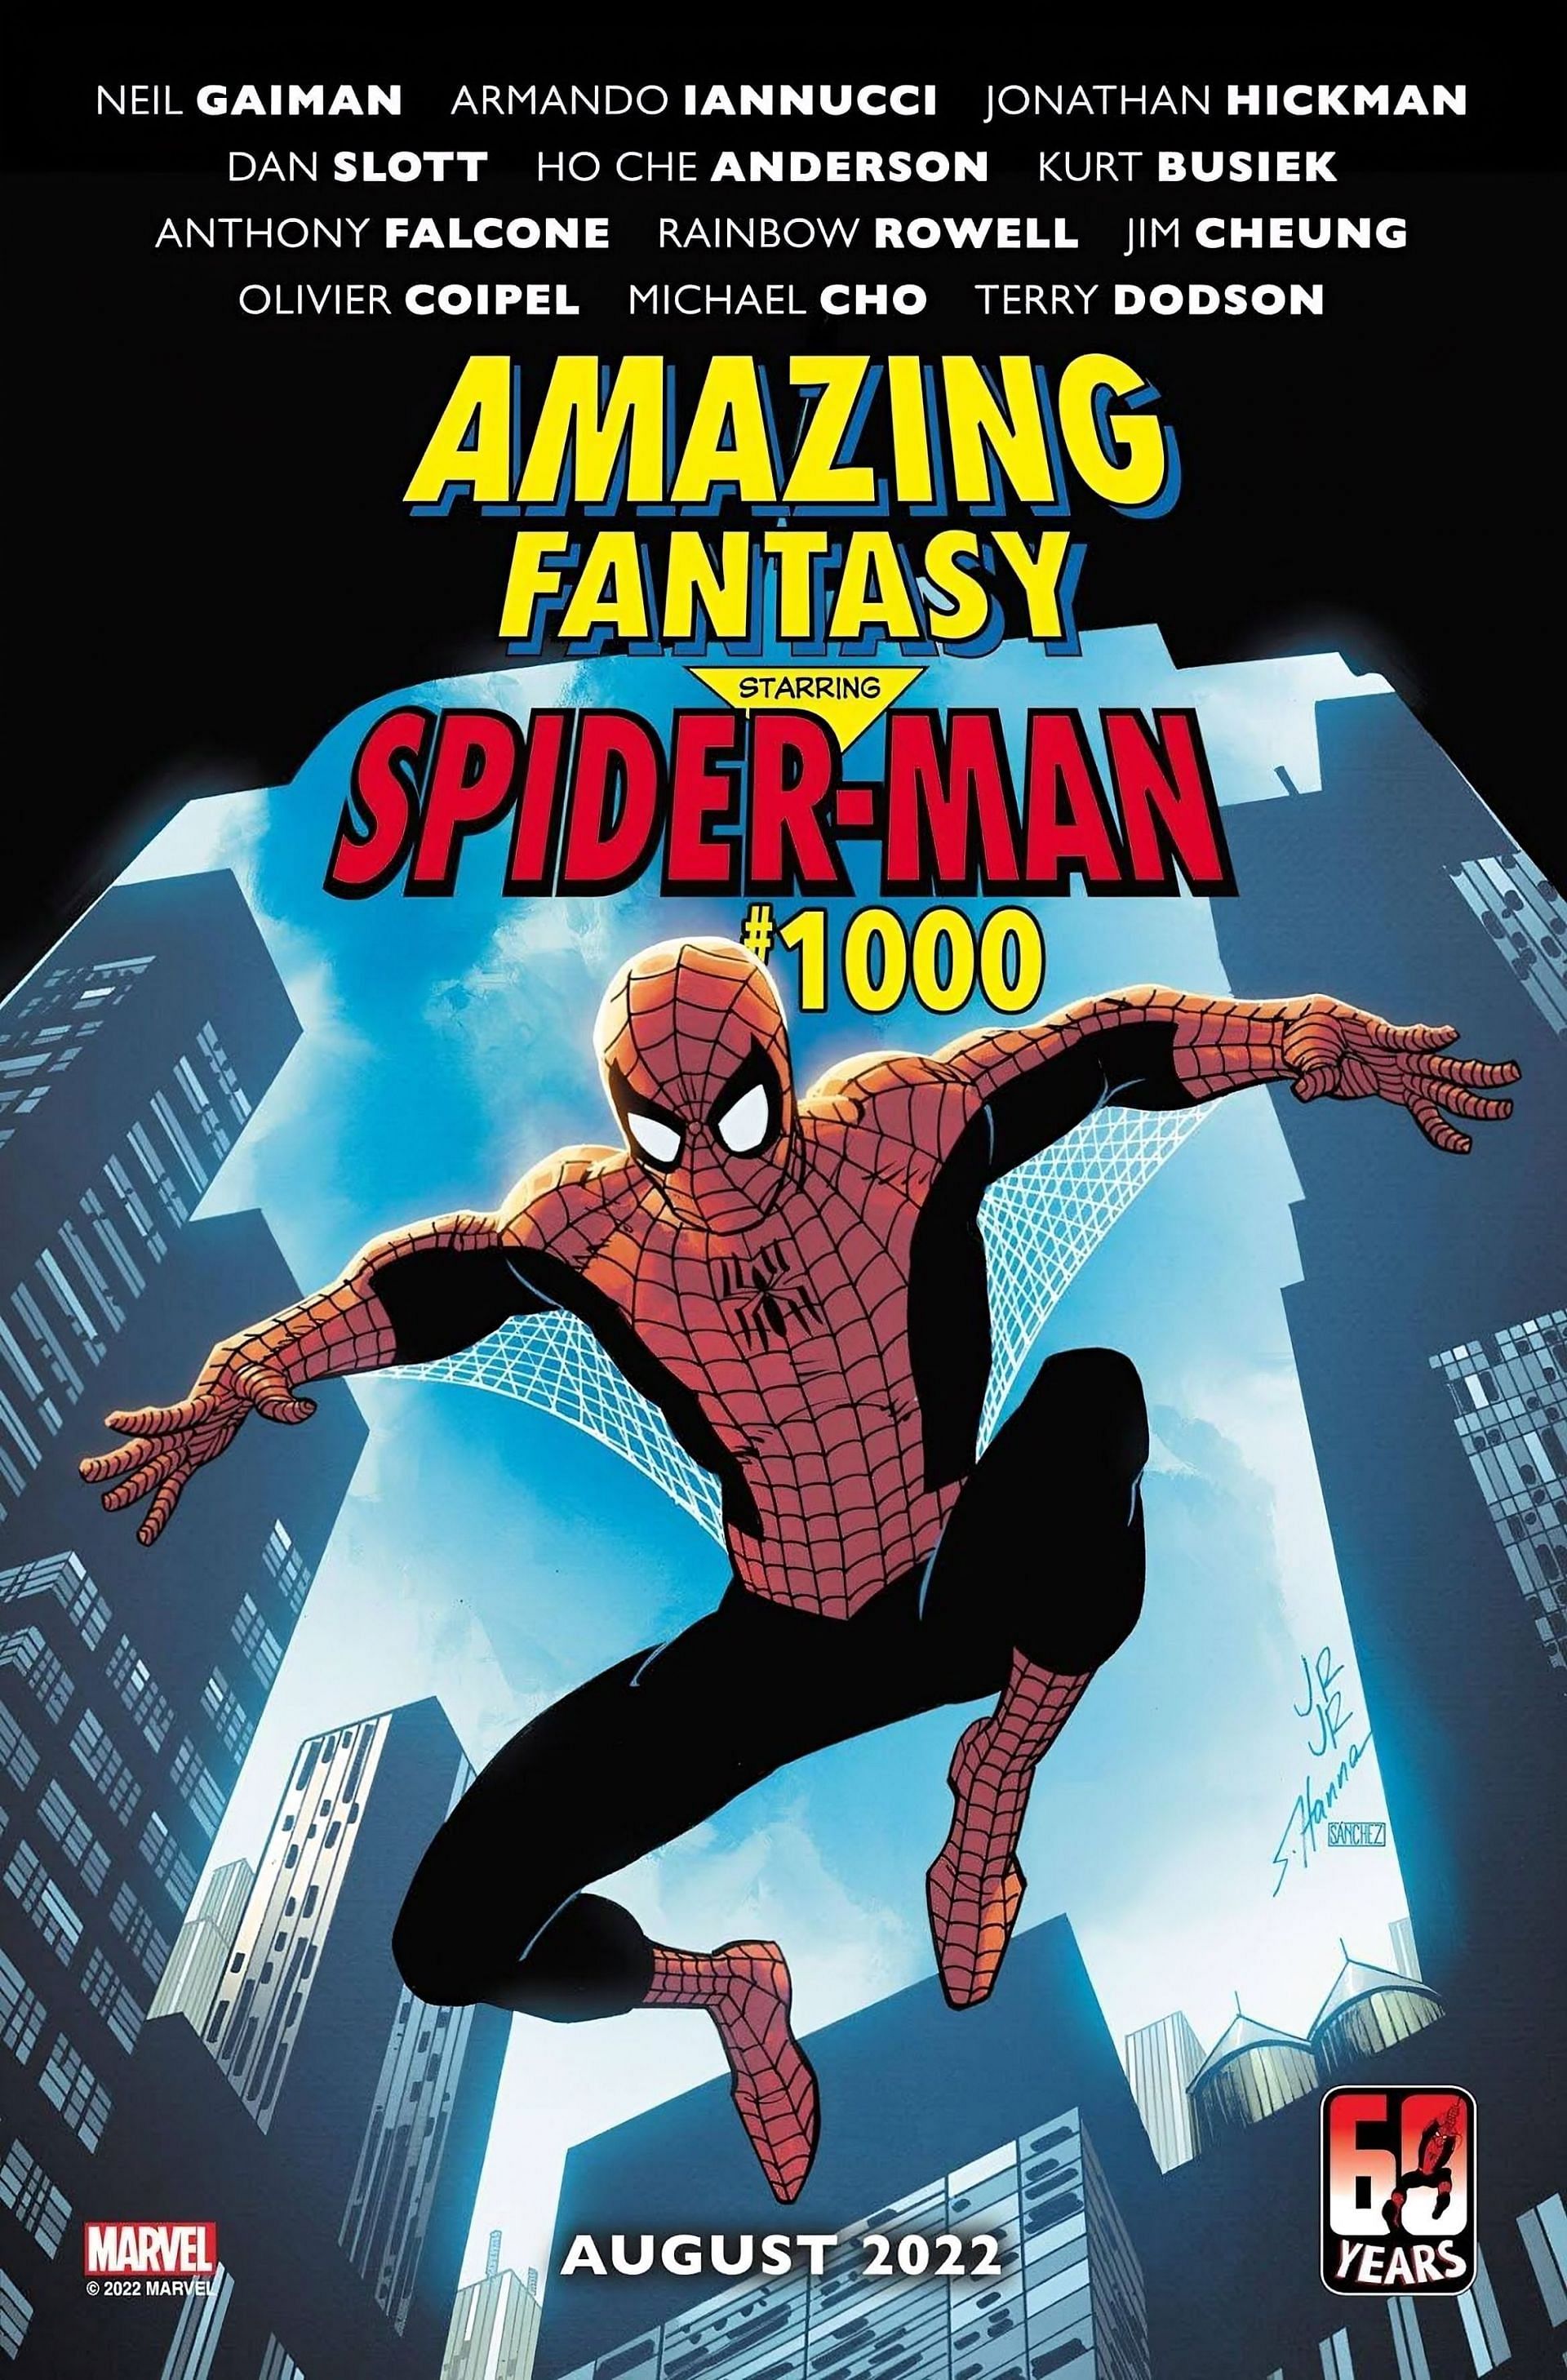 Amazing Fantasy #1000 comic cover (Image via Marvel Comics)